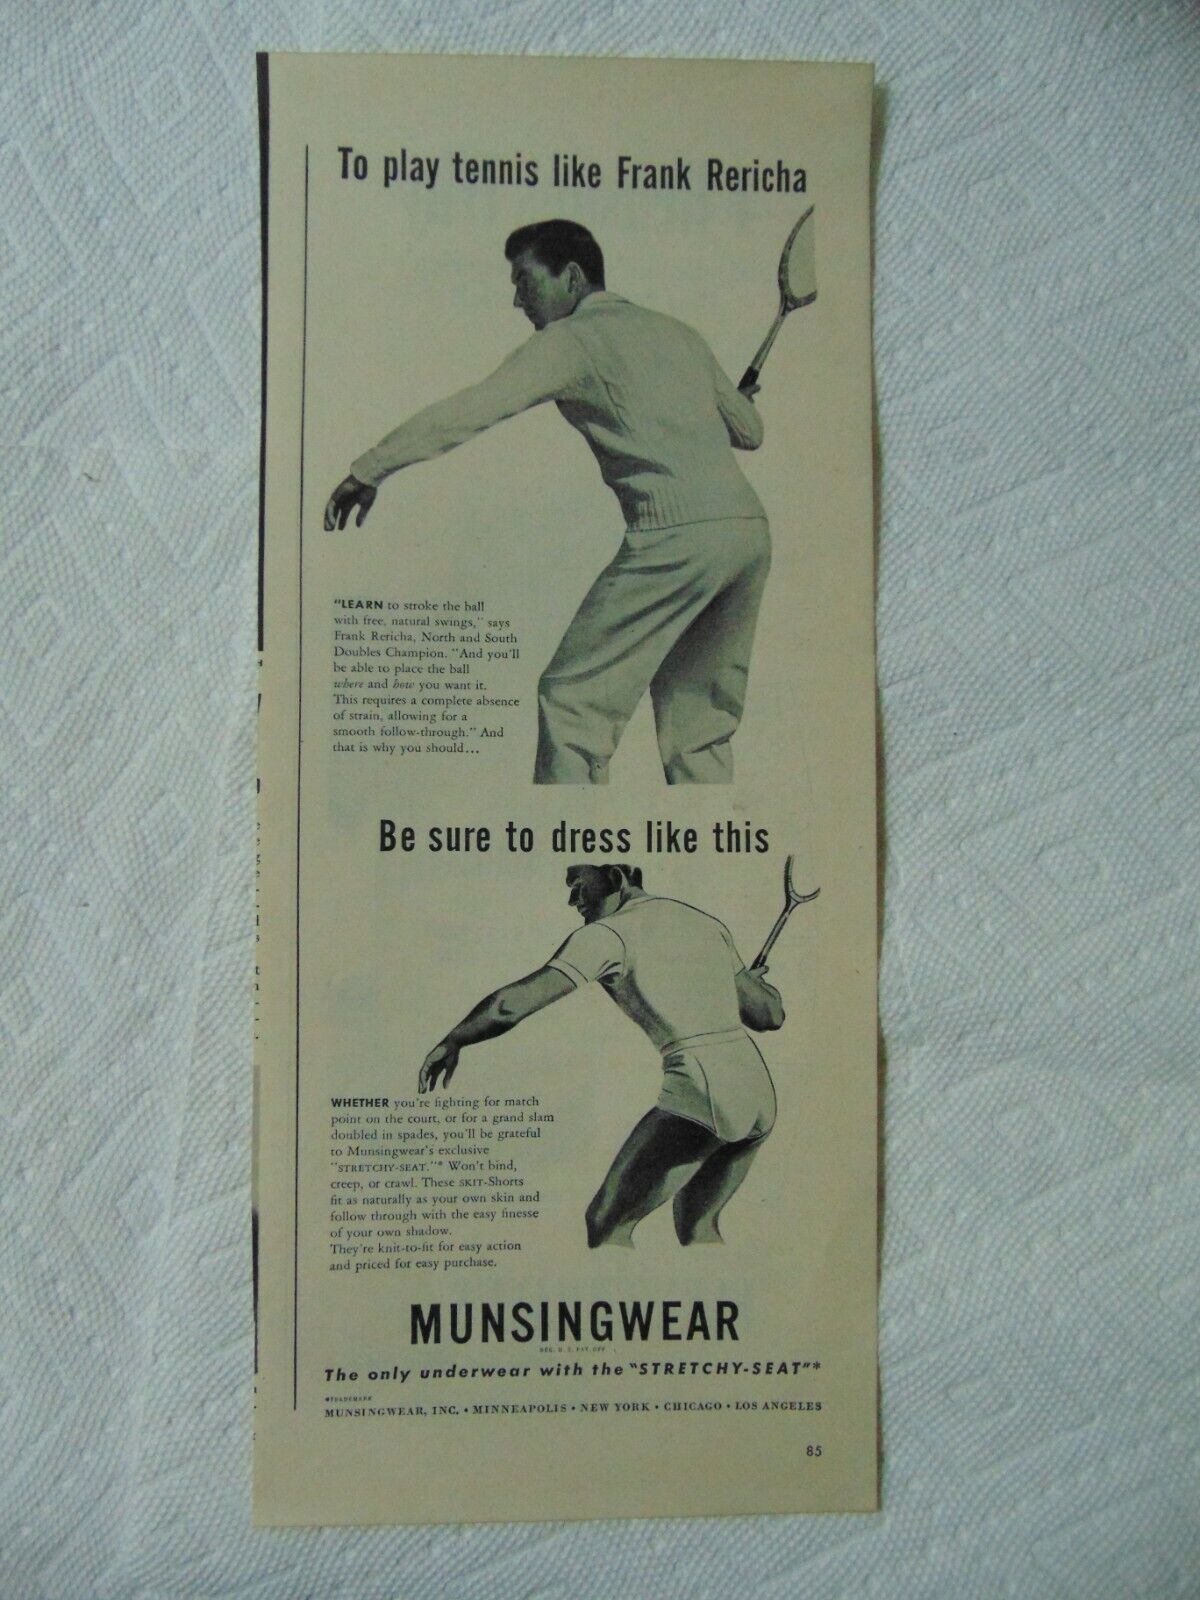 1946 MUNSINGWEAR Tennis Frank Rericha vintage art print ad